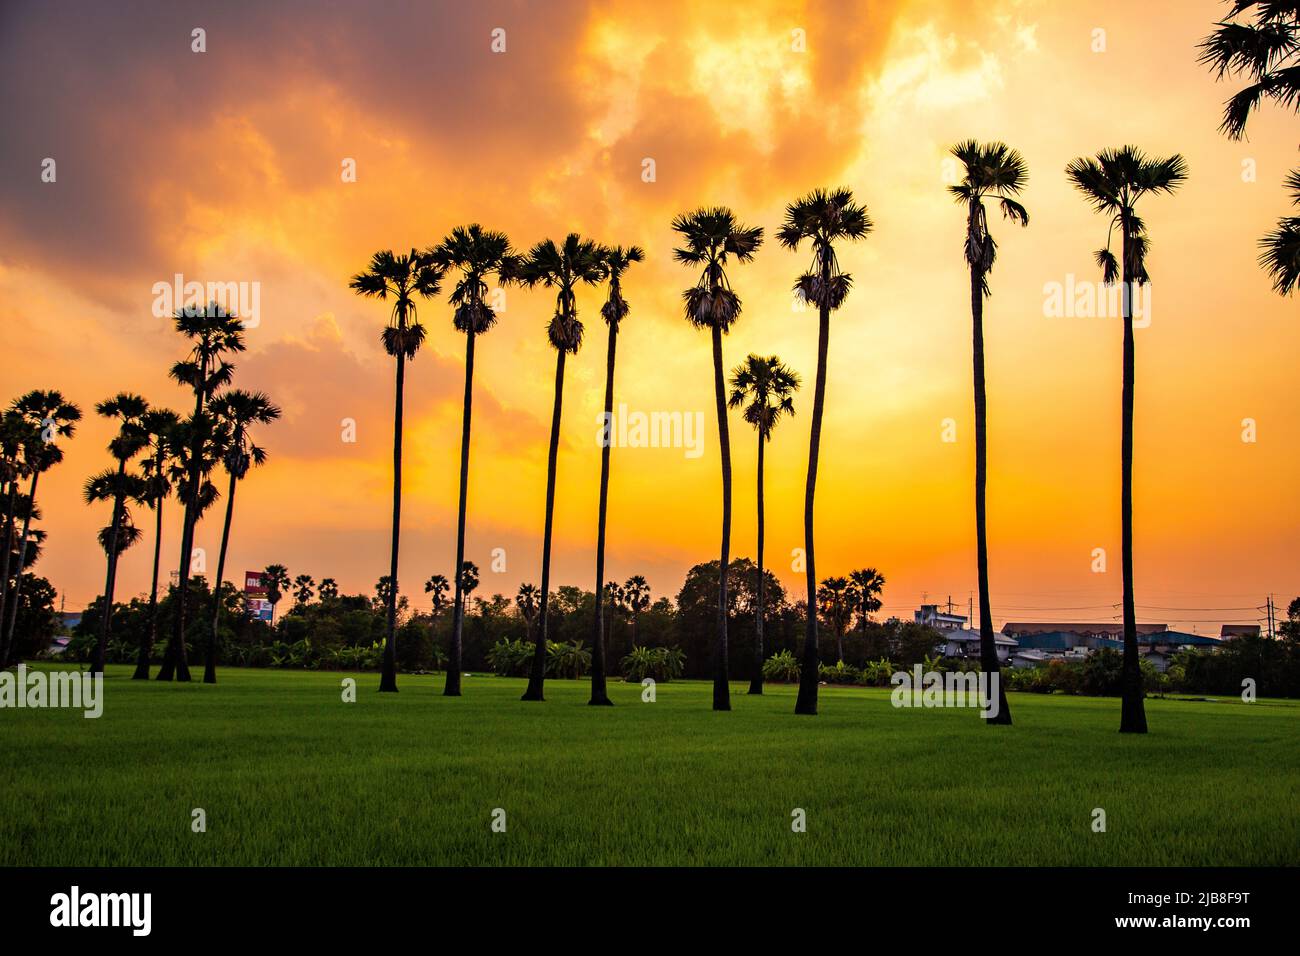 Dongtan Samkhok palm trees and rice fields during sunset in Pathum Thani, Bangkok, Thailand Stock Photo